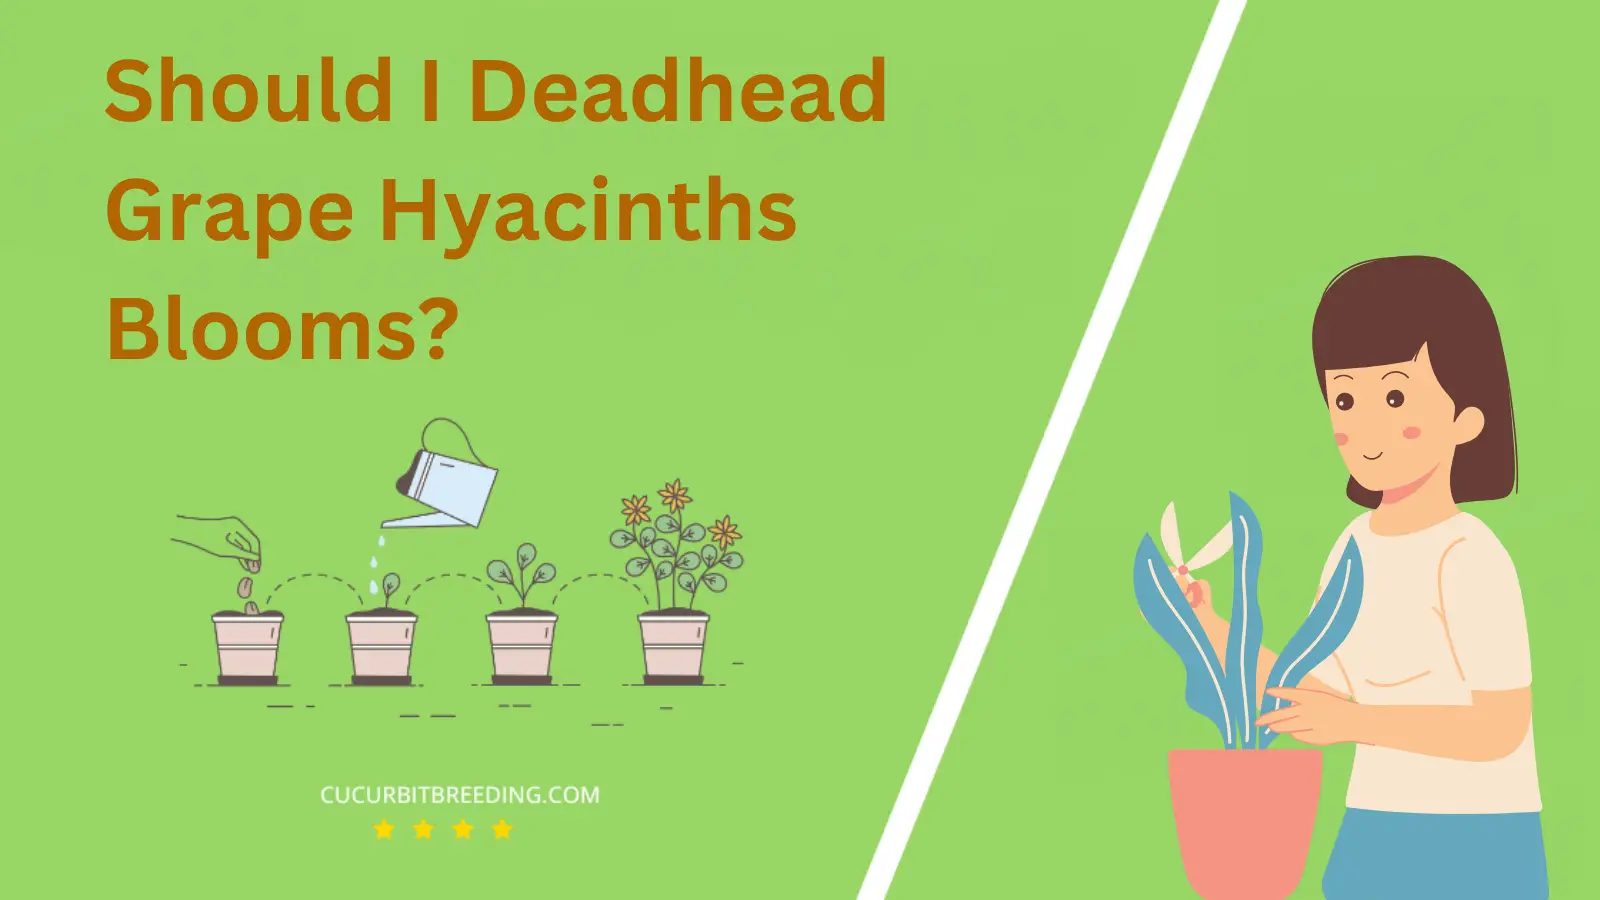 Should I Deadhead Grape Hyacinths Blooms?